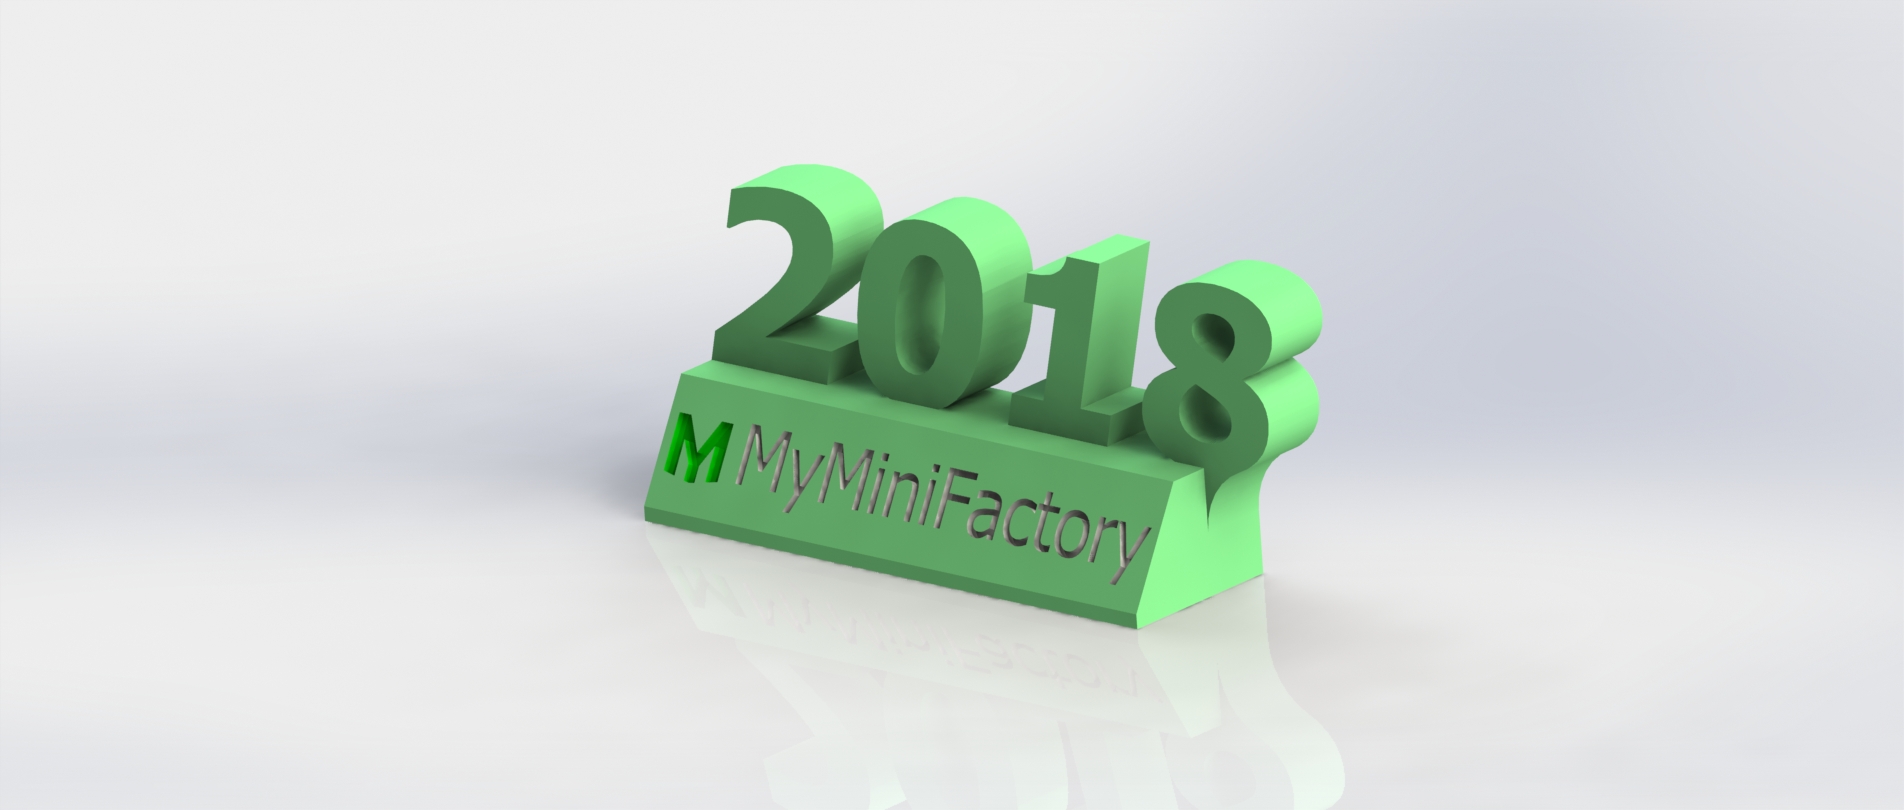 MyMiniFactory 2018 decoration